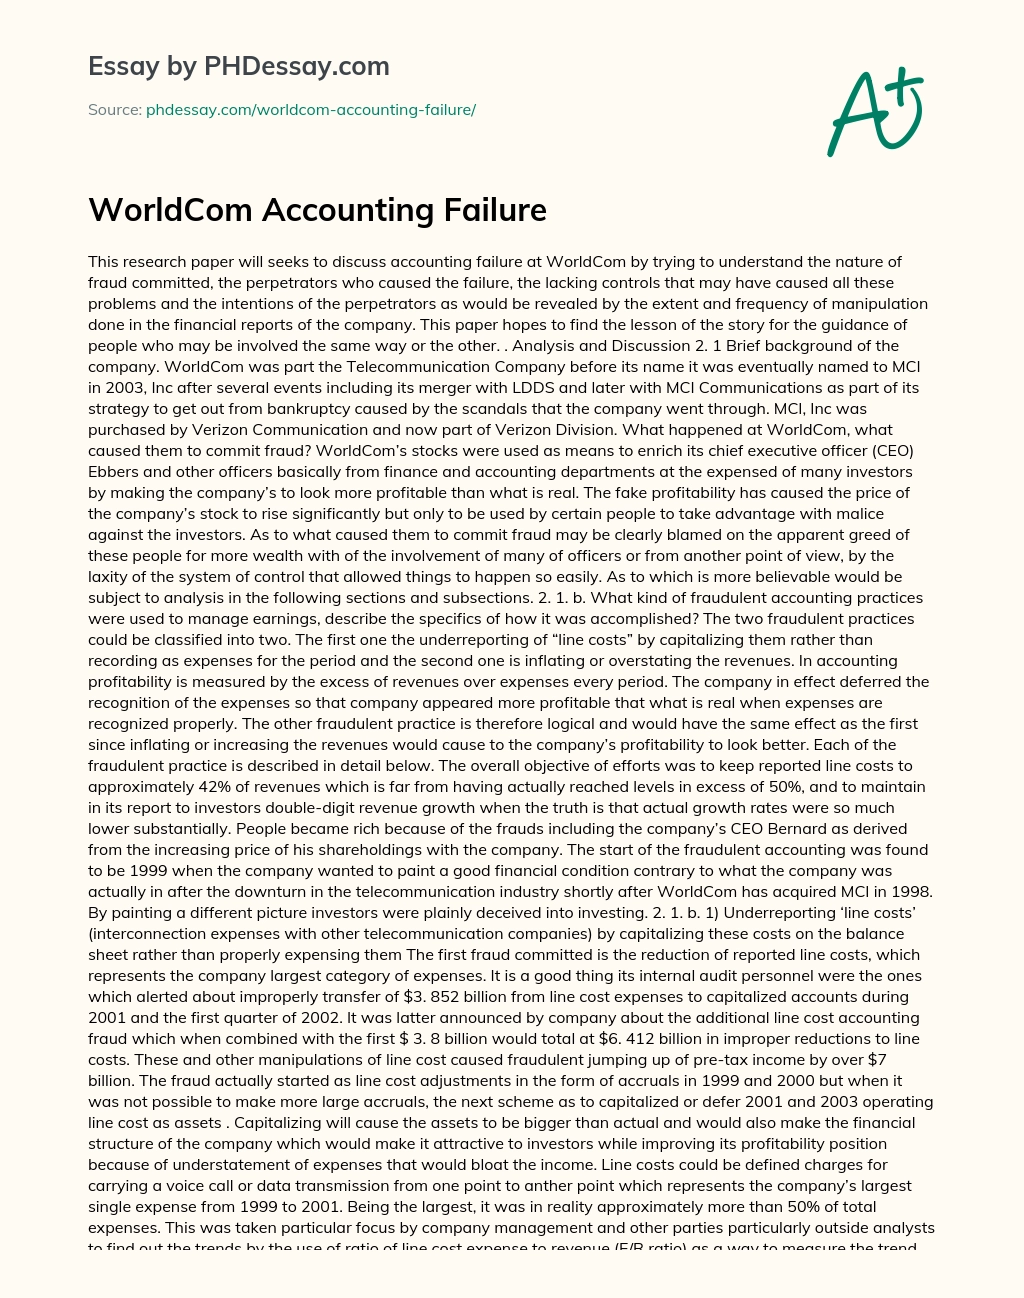 WorldCom Accounting Failure essay